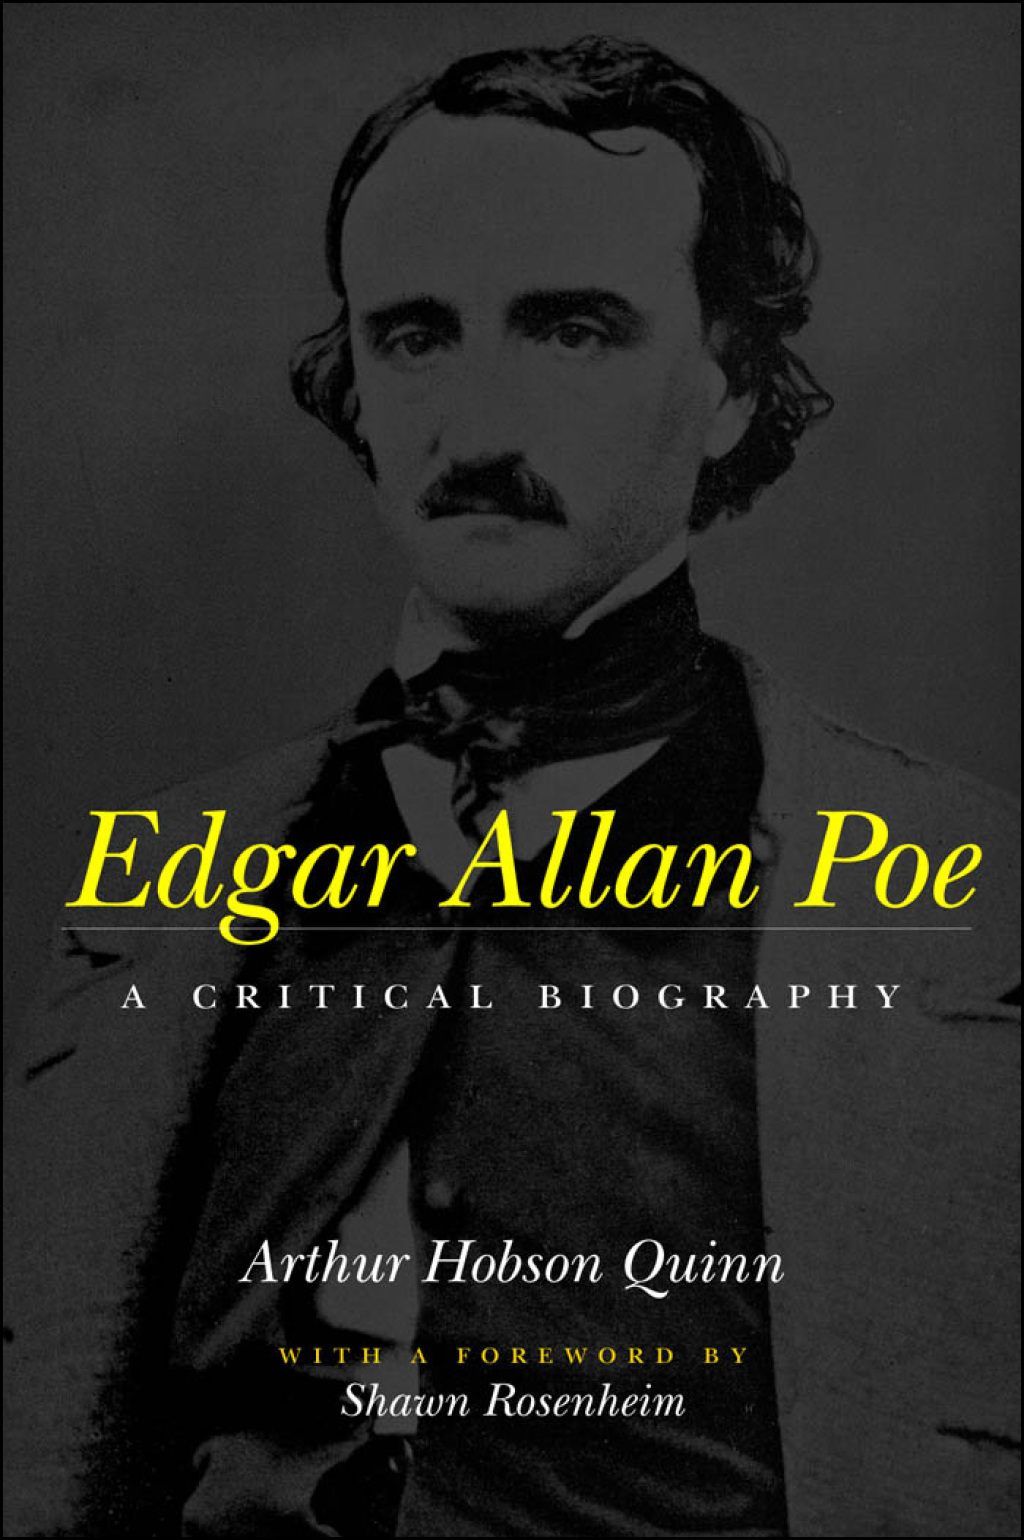 Edgar Allan Poe (eBook) - Arthur Hobson Quinn,